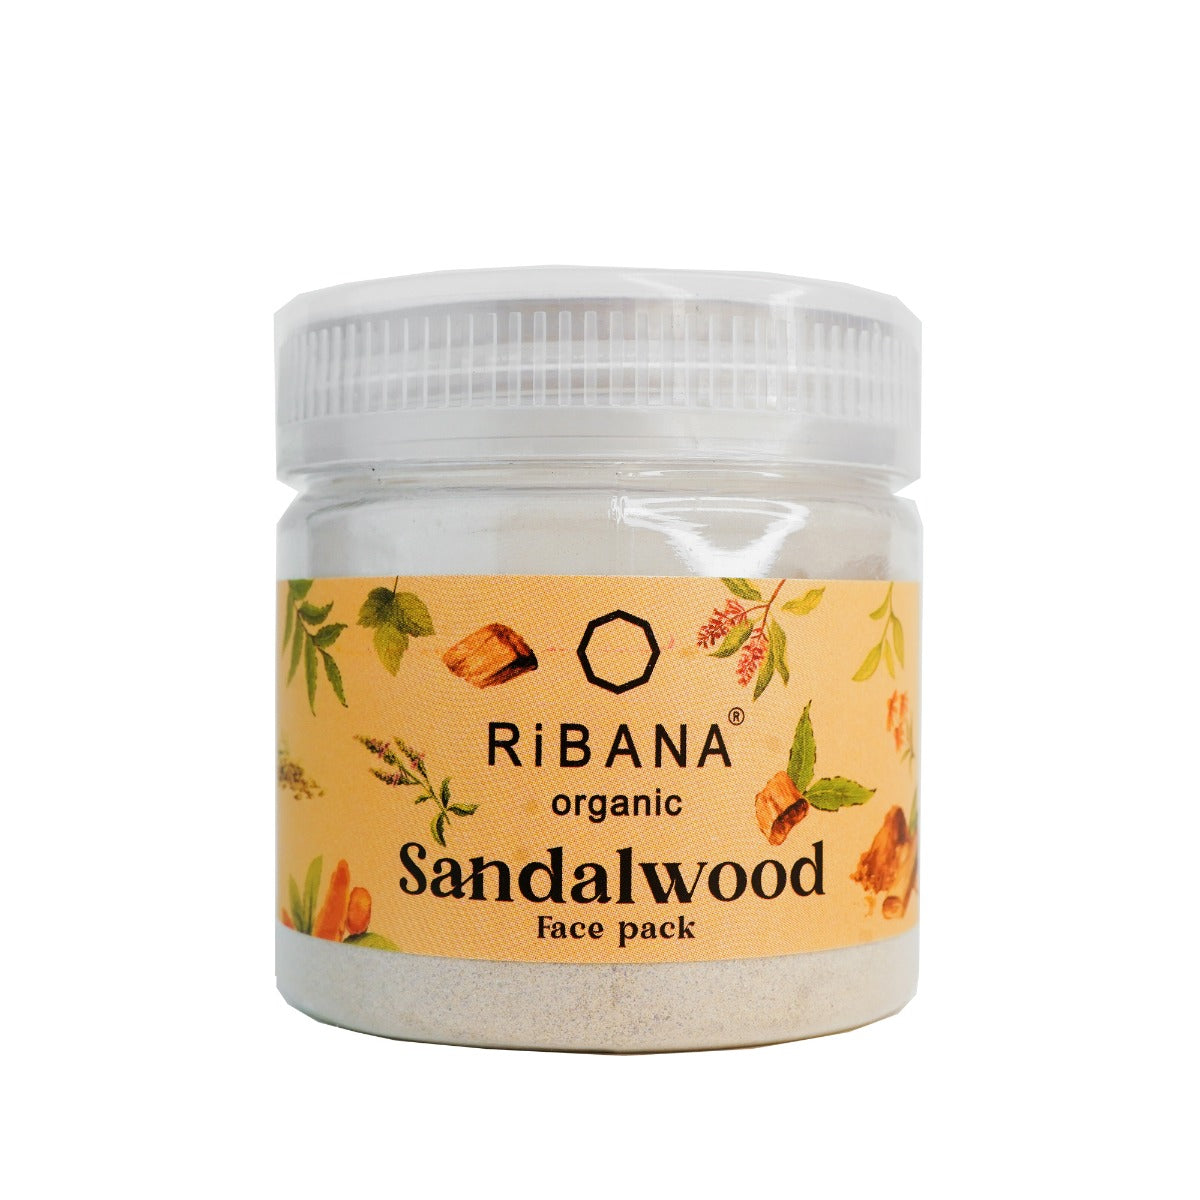 RiBANA Sandalwood Face Pack (50gm)